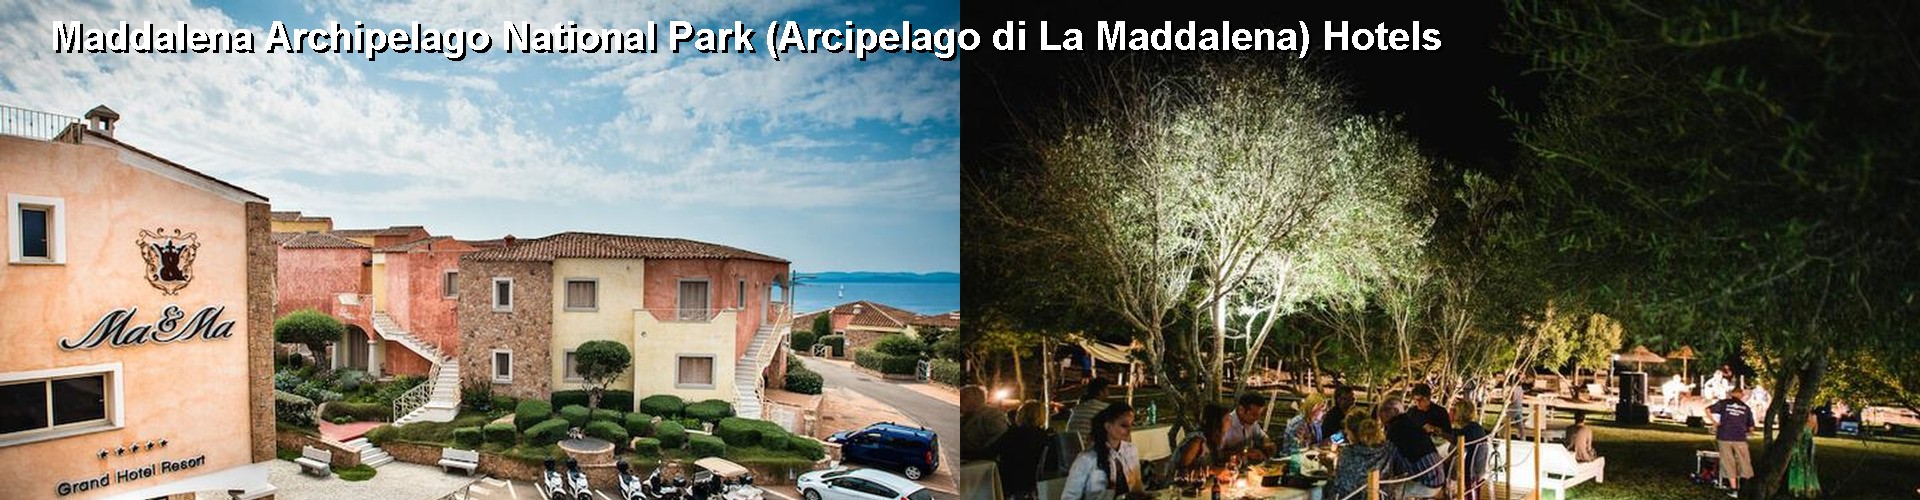 5 Best Hotels near Maddalena Archipelago National Park (Arcipelago di La Maddalena)